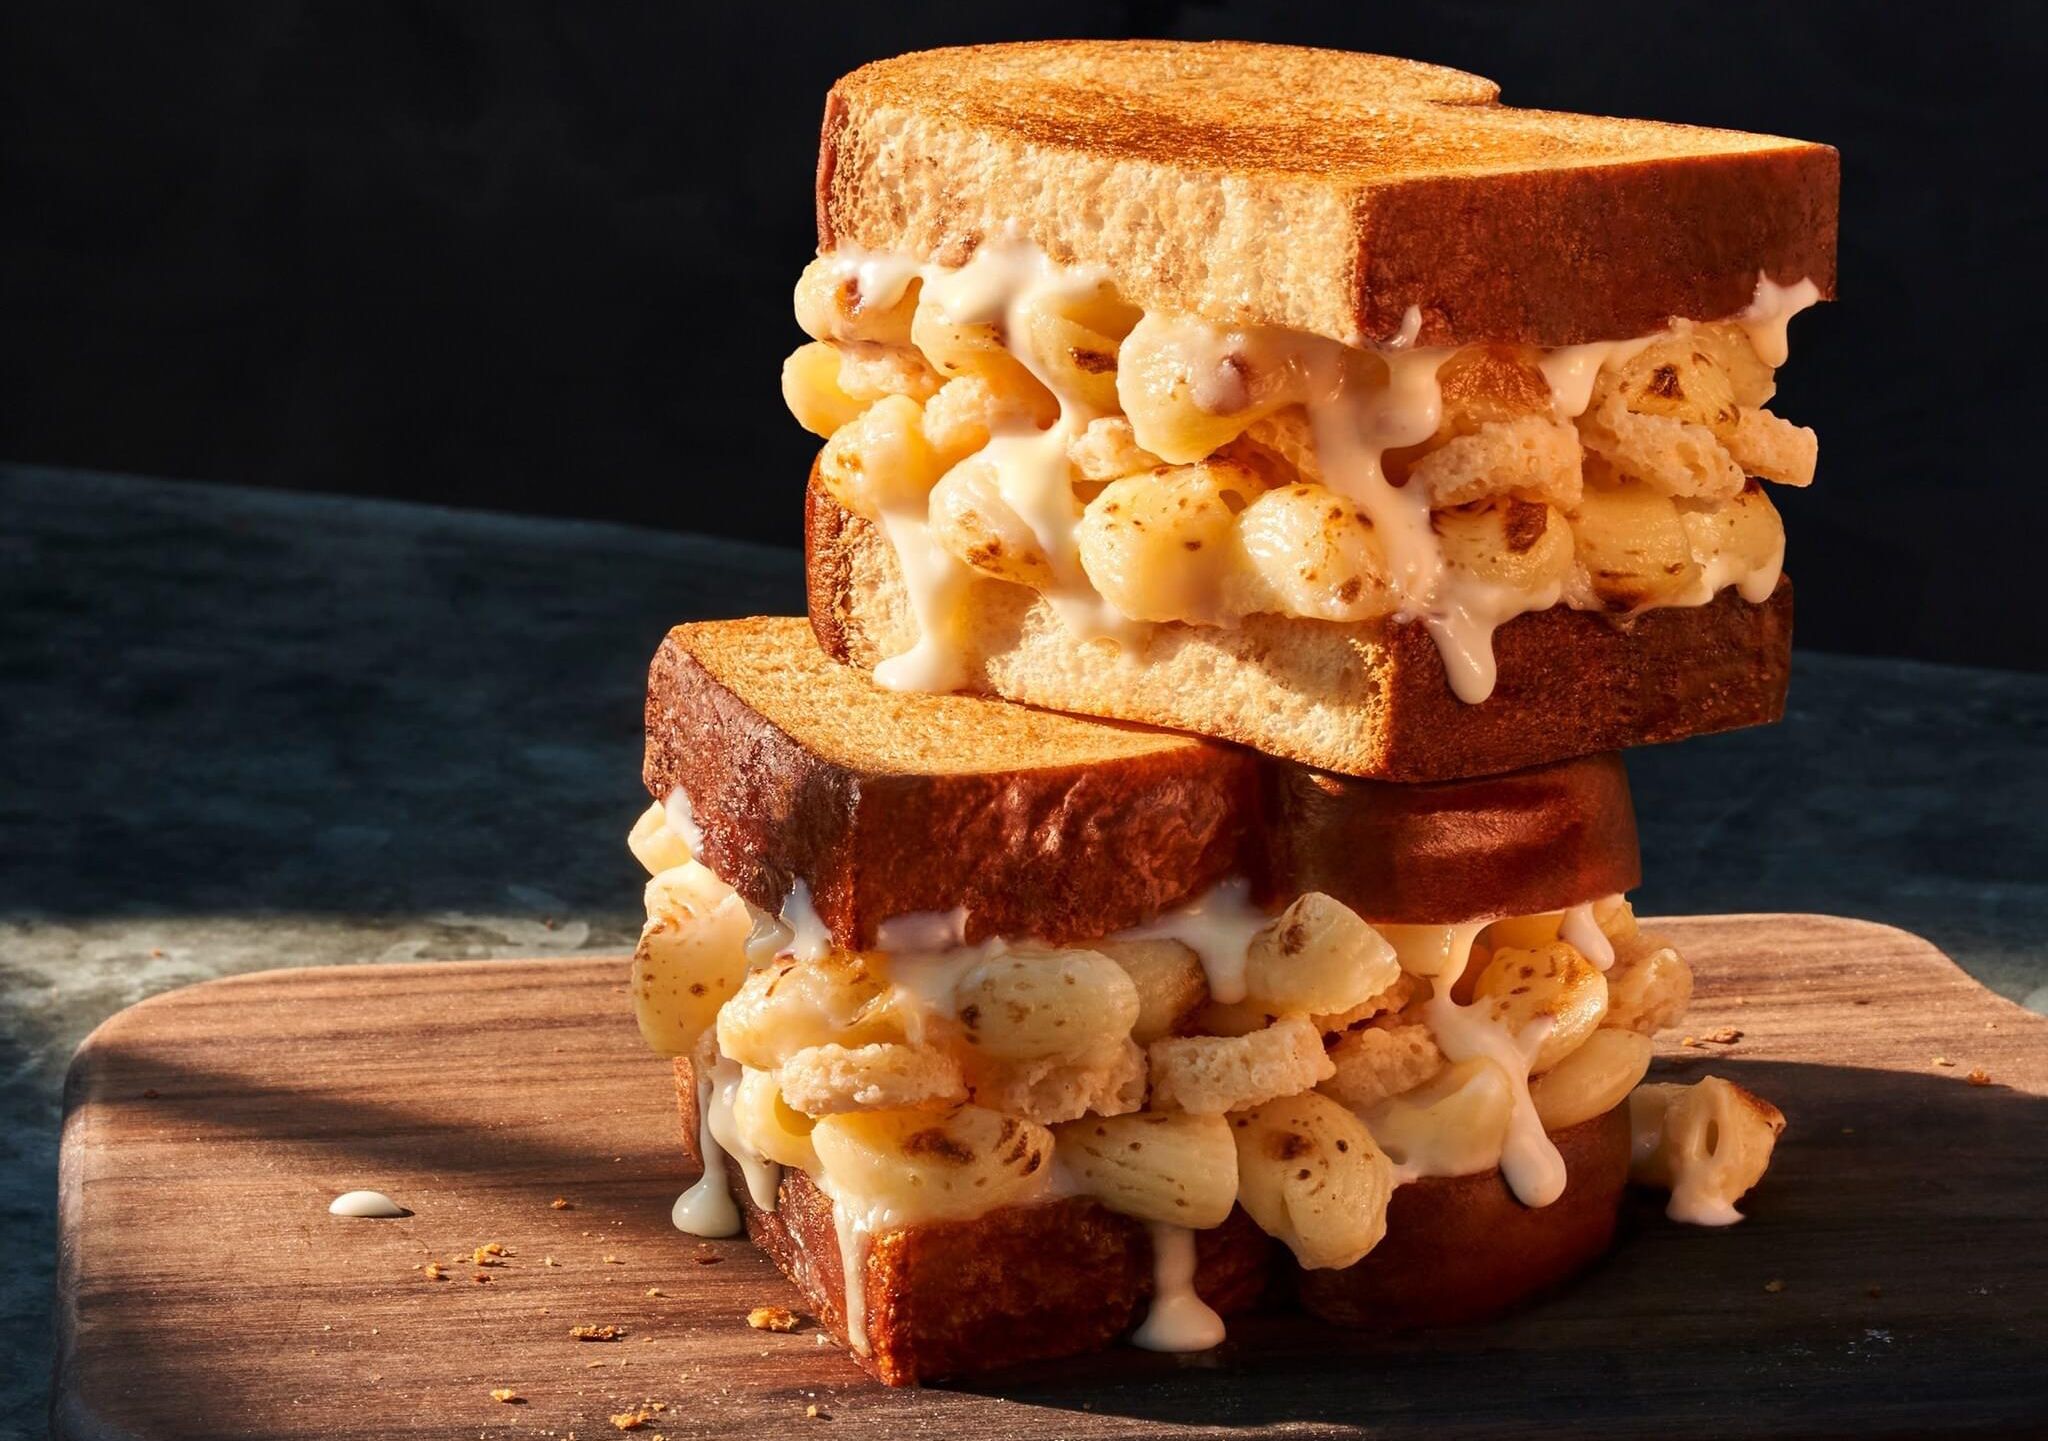 The New Creamy and Crispy Mac & Cheese Sandwich Debuts at Panera Bread